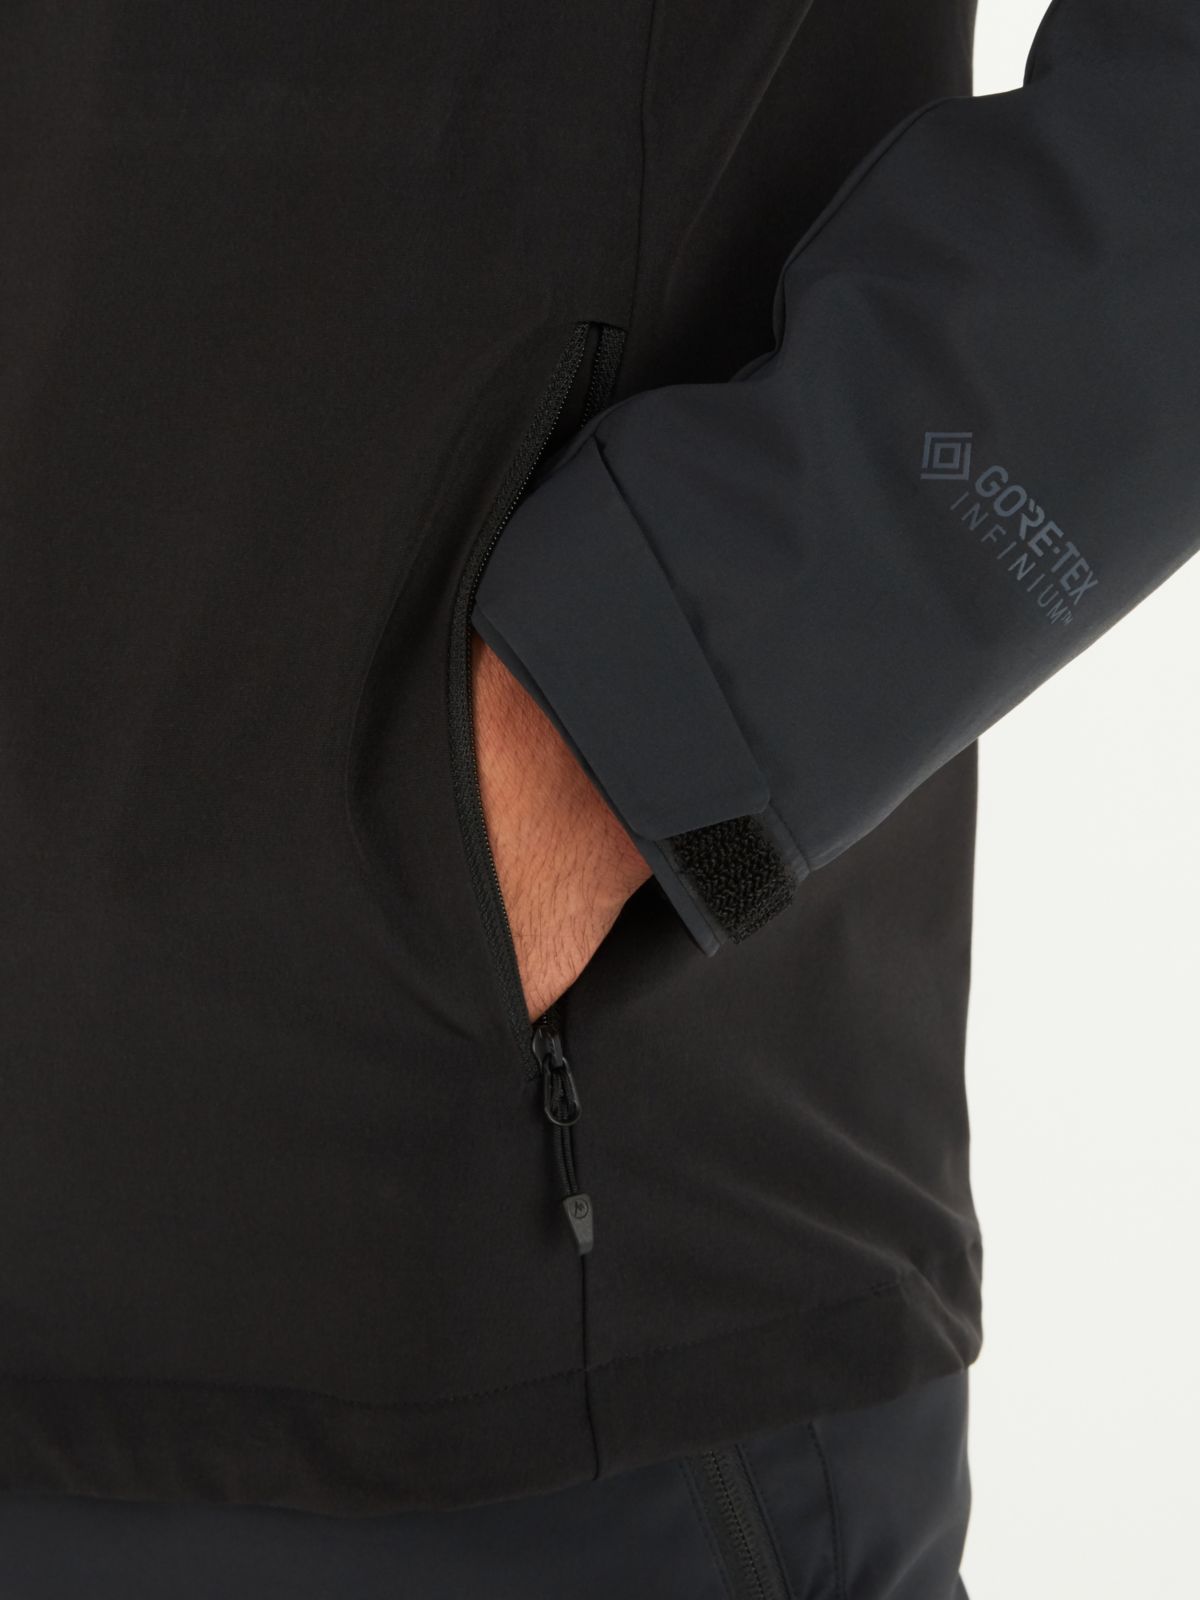 zip pocket for storage in jacket